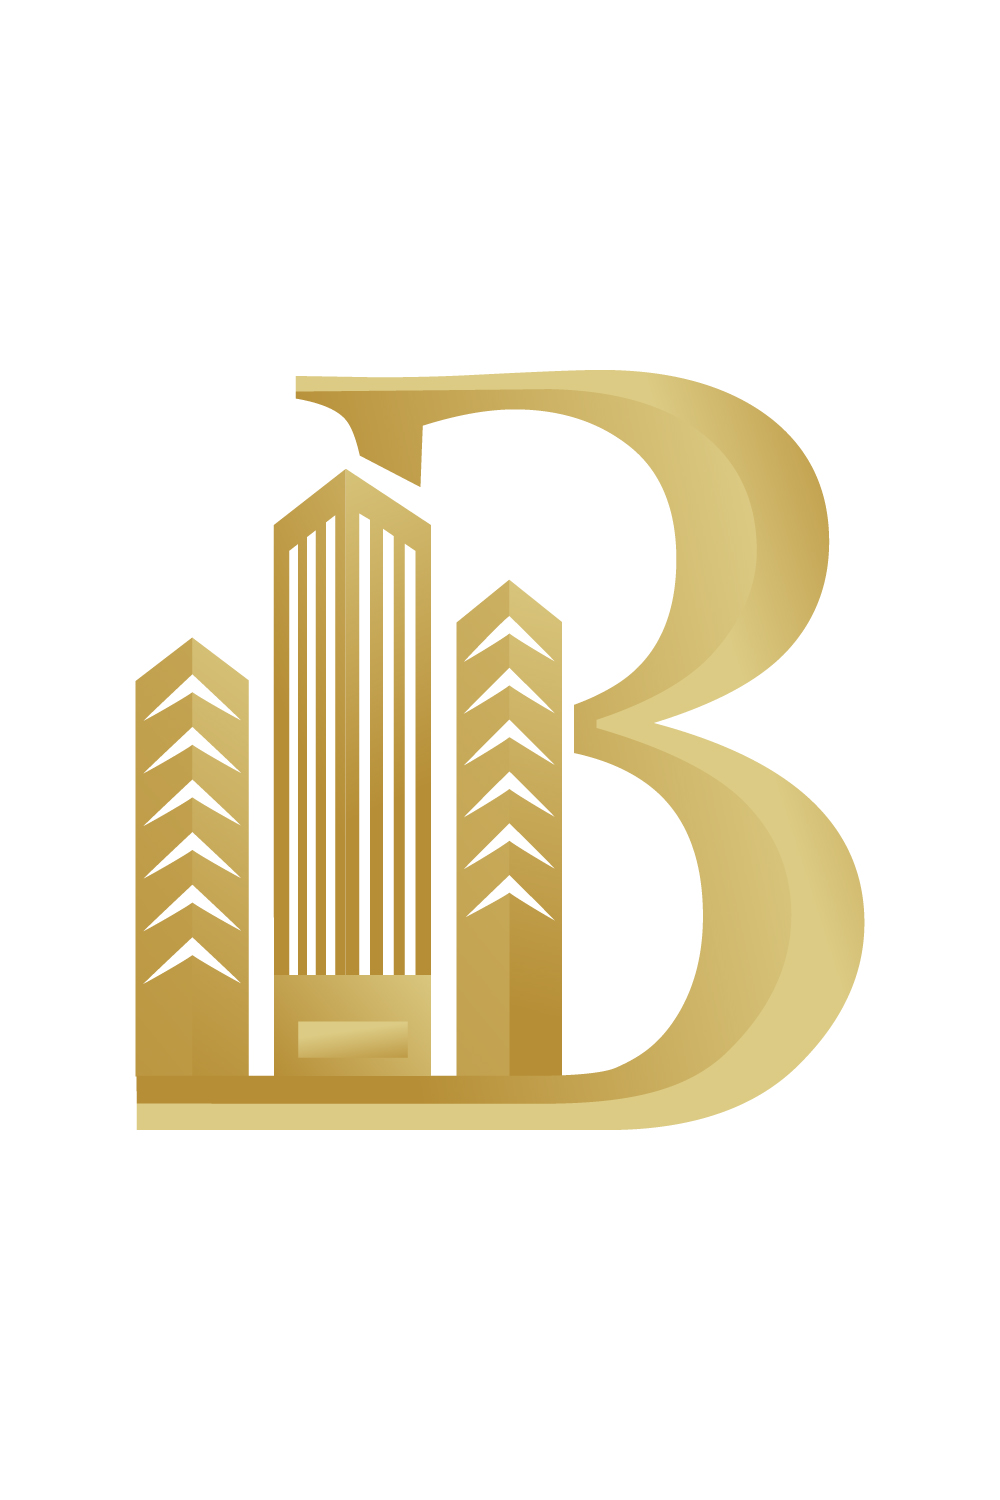 Luxury B Real Estate logo design vector images B logo design template arts B golden color Real Estate logo best business icon pinterest preview image.